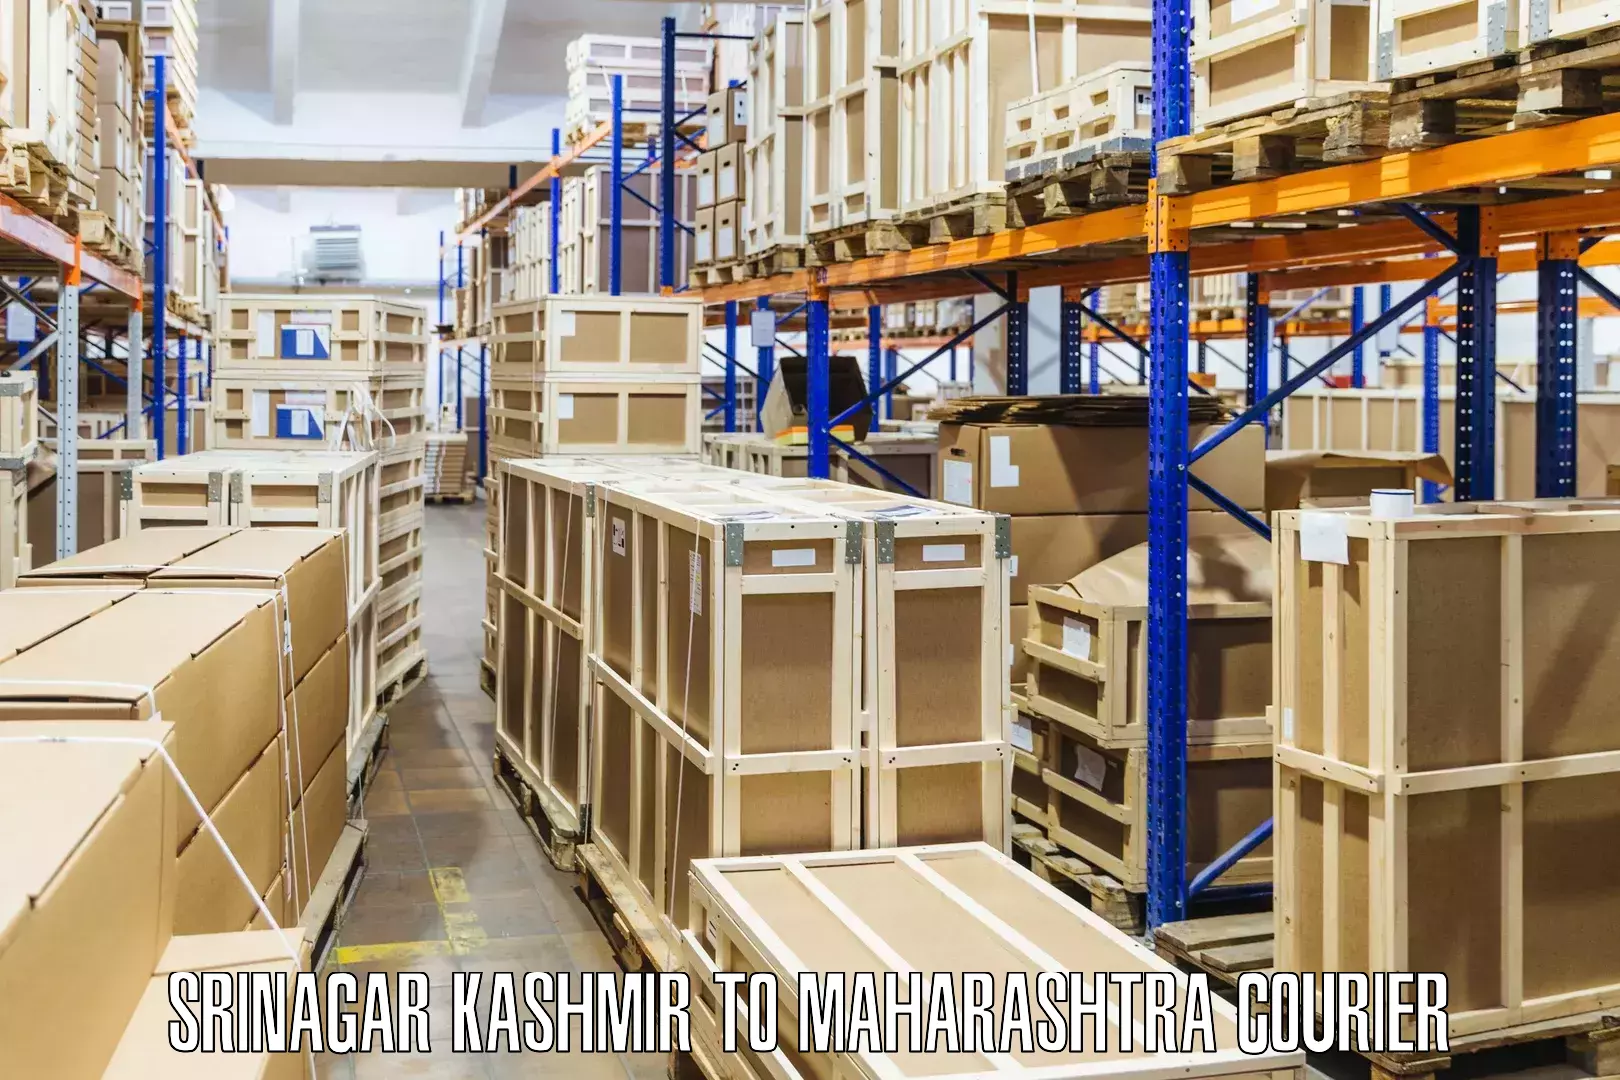 State-of-the-art courier technology Srinagar Kashmir to Raigarh Maharashtra